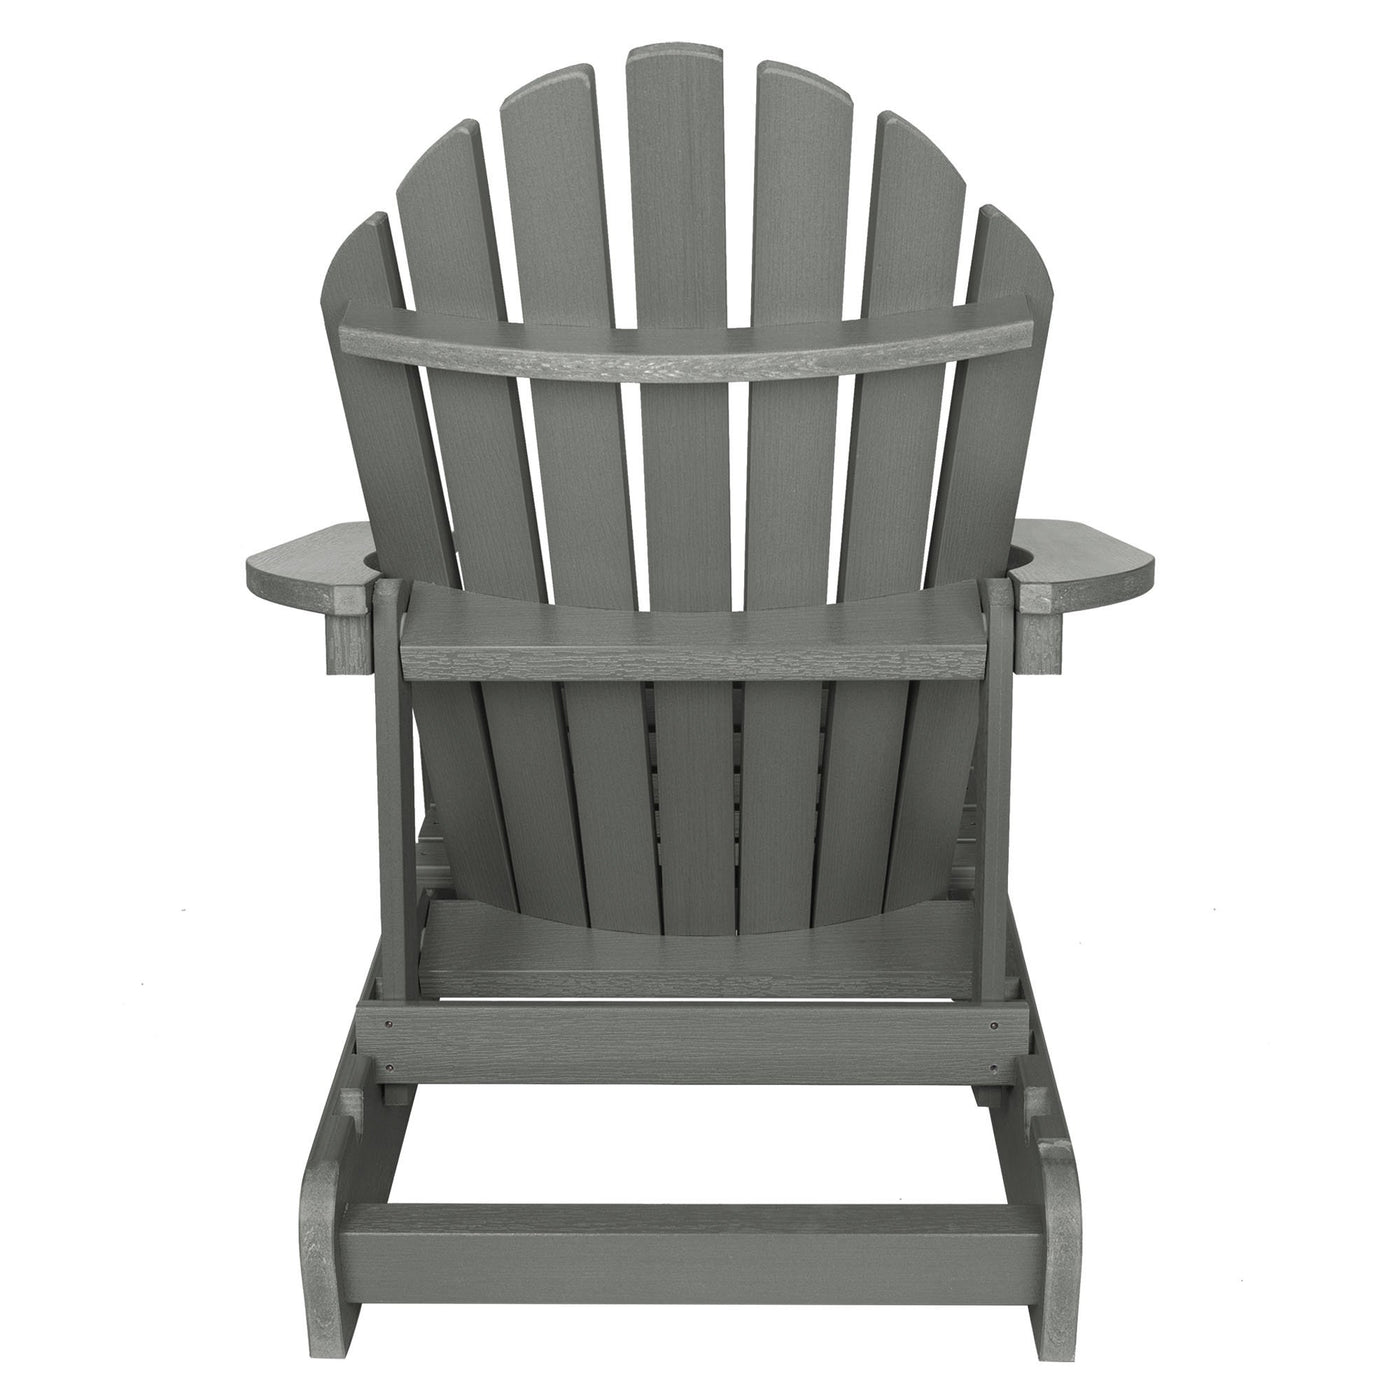 Back view of Hamilton Adirondack chair in Coastal Teak gray